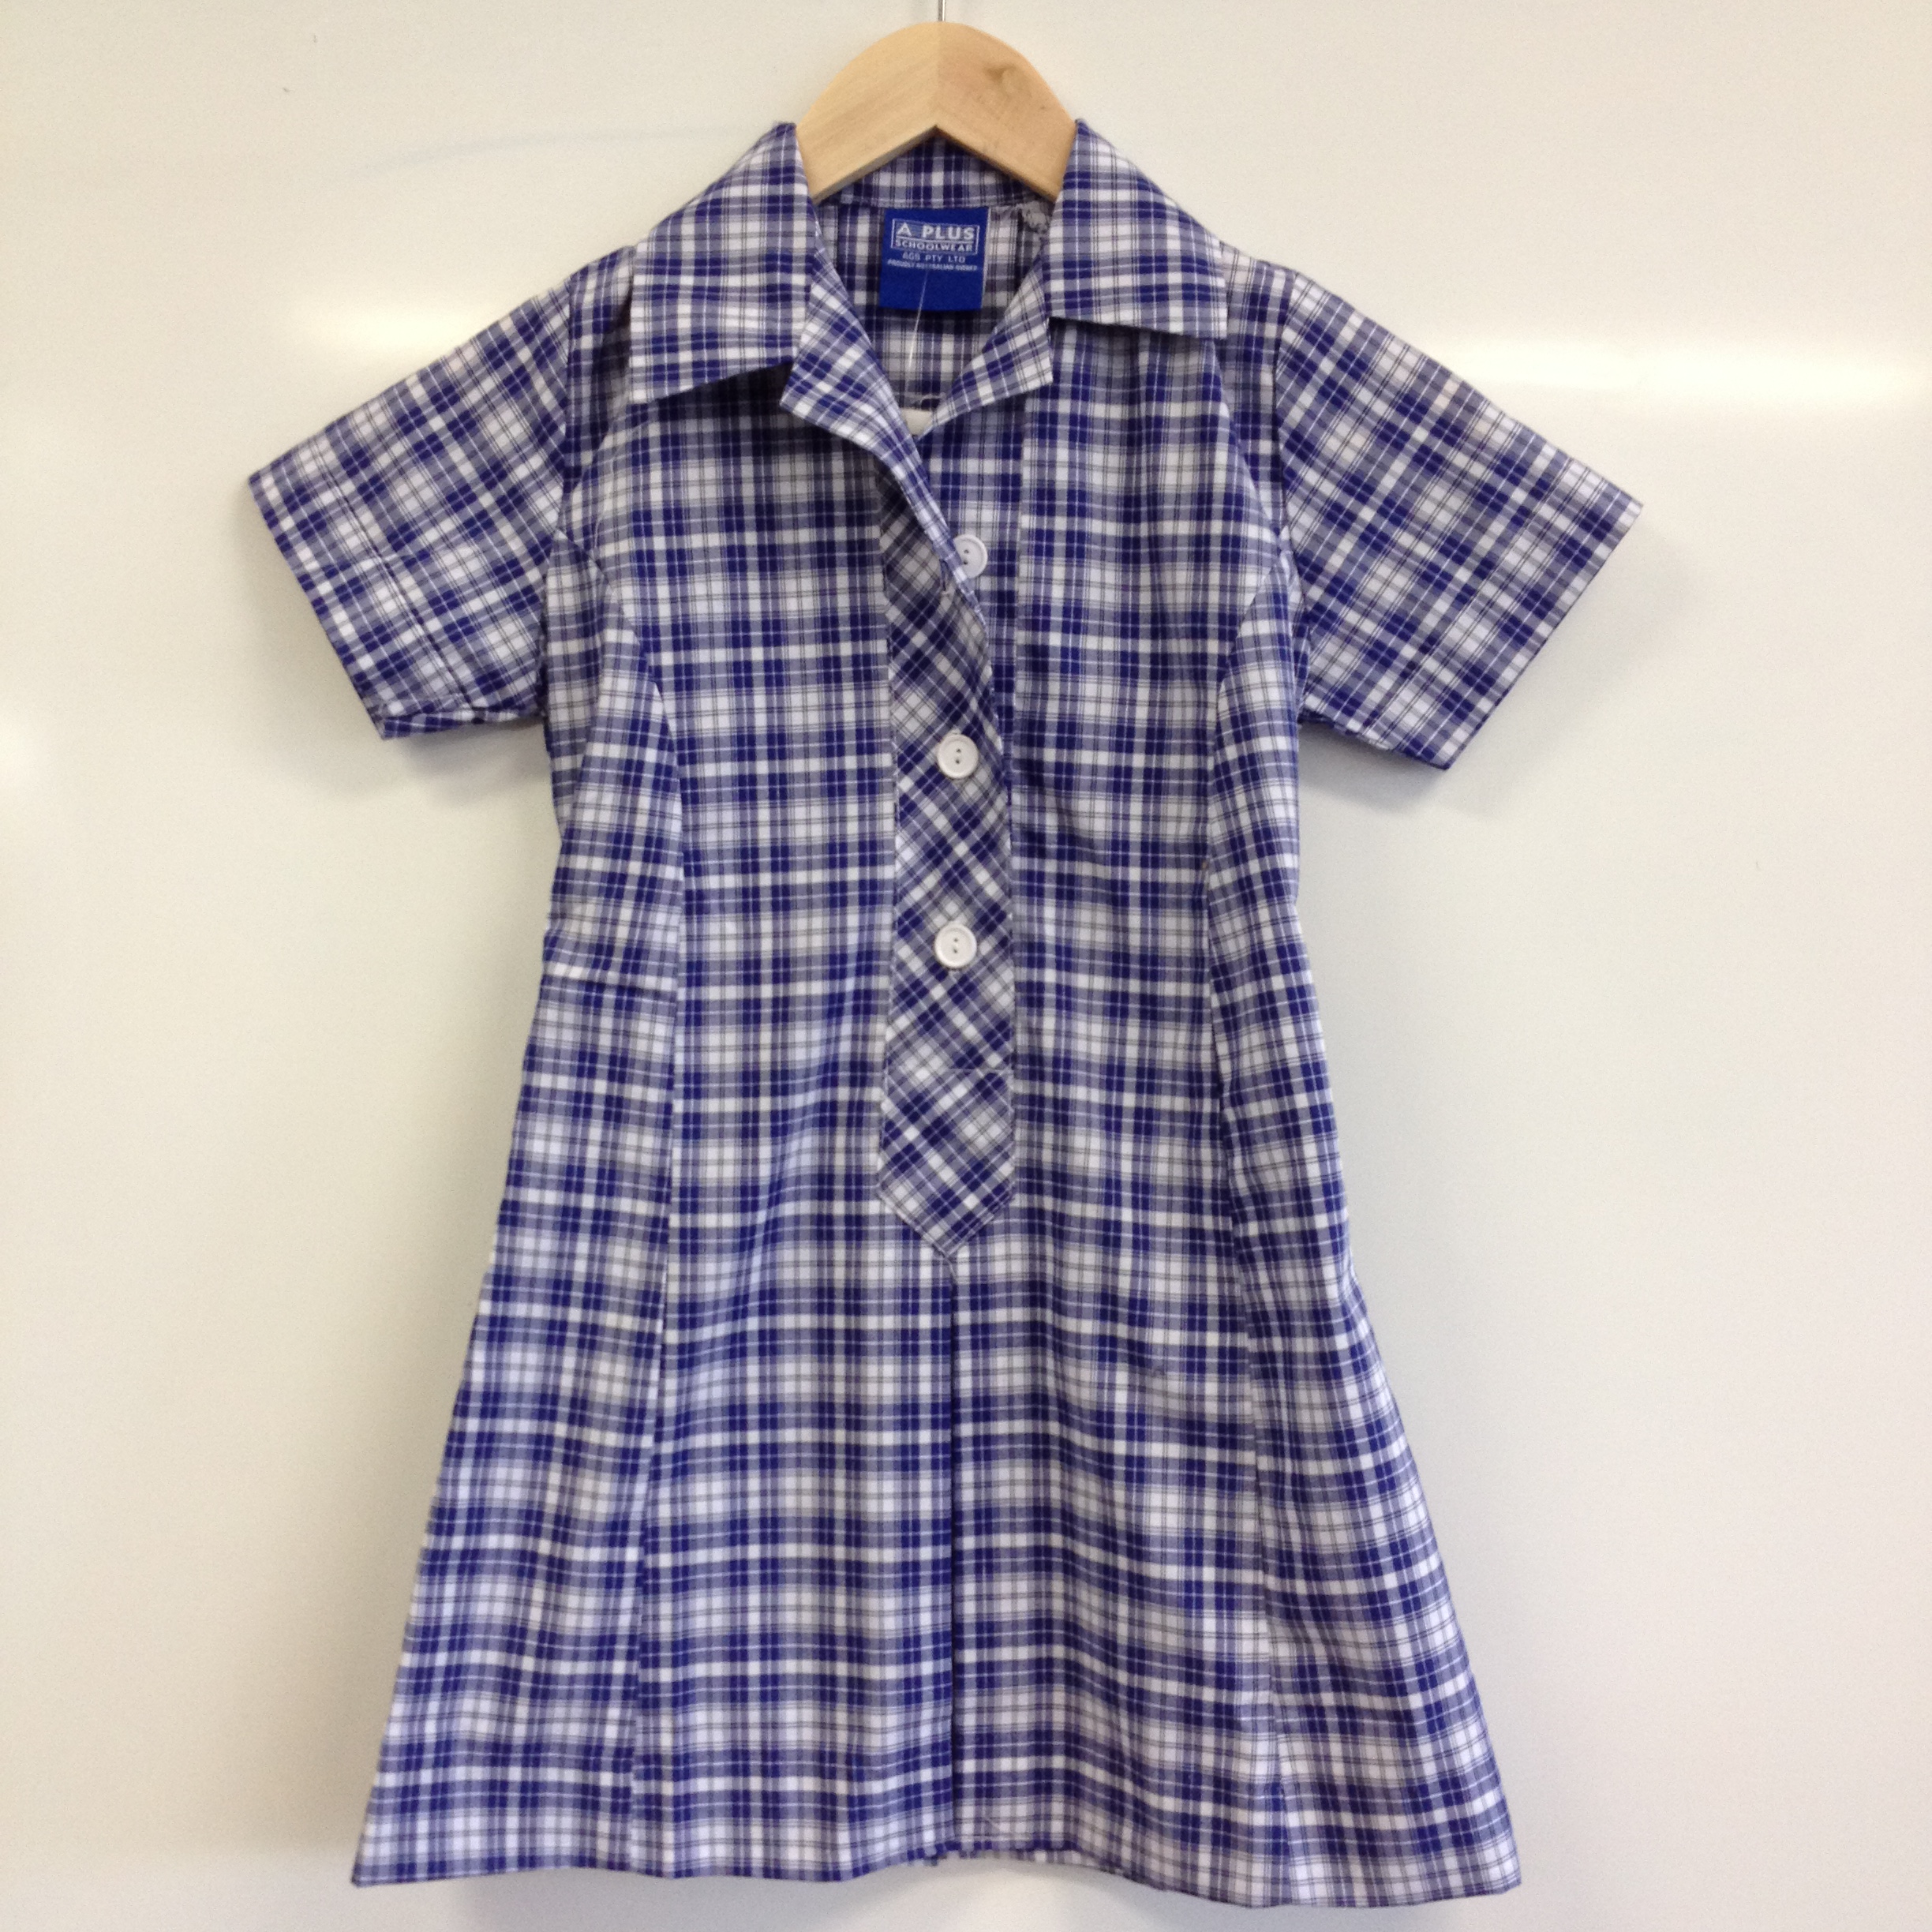 Our Uniform – Strathfieldsaye Primary School